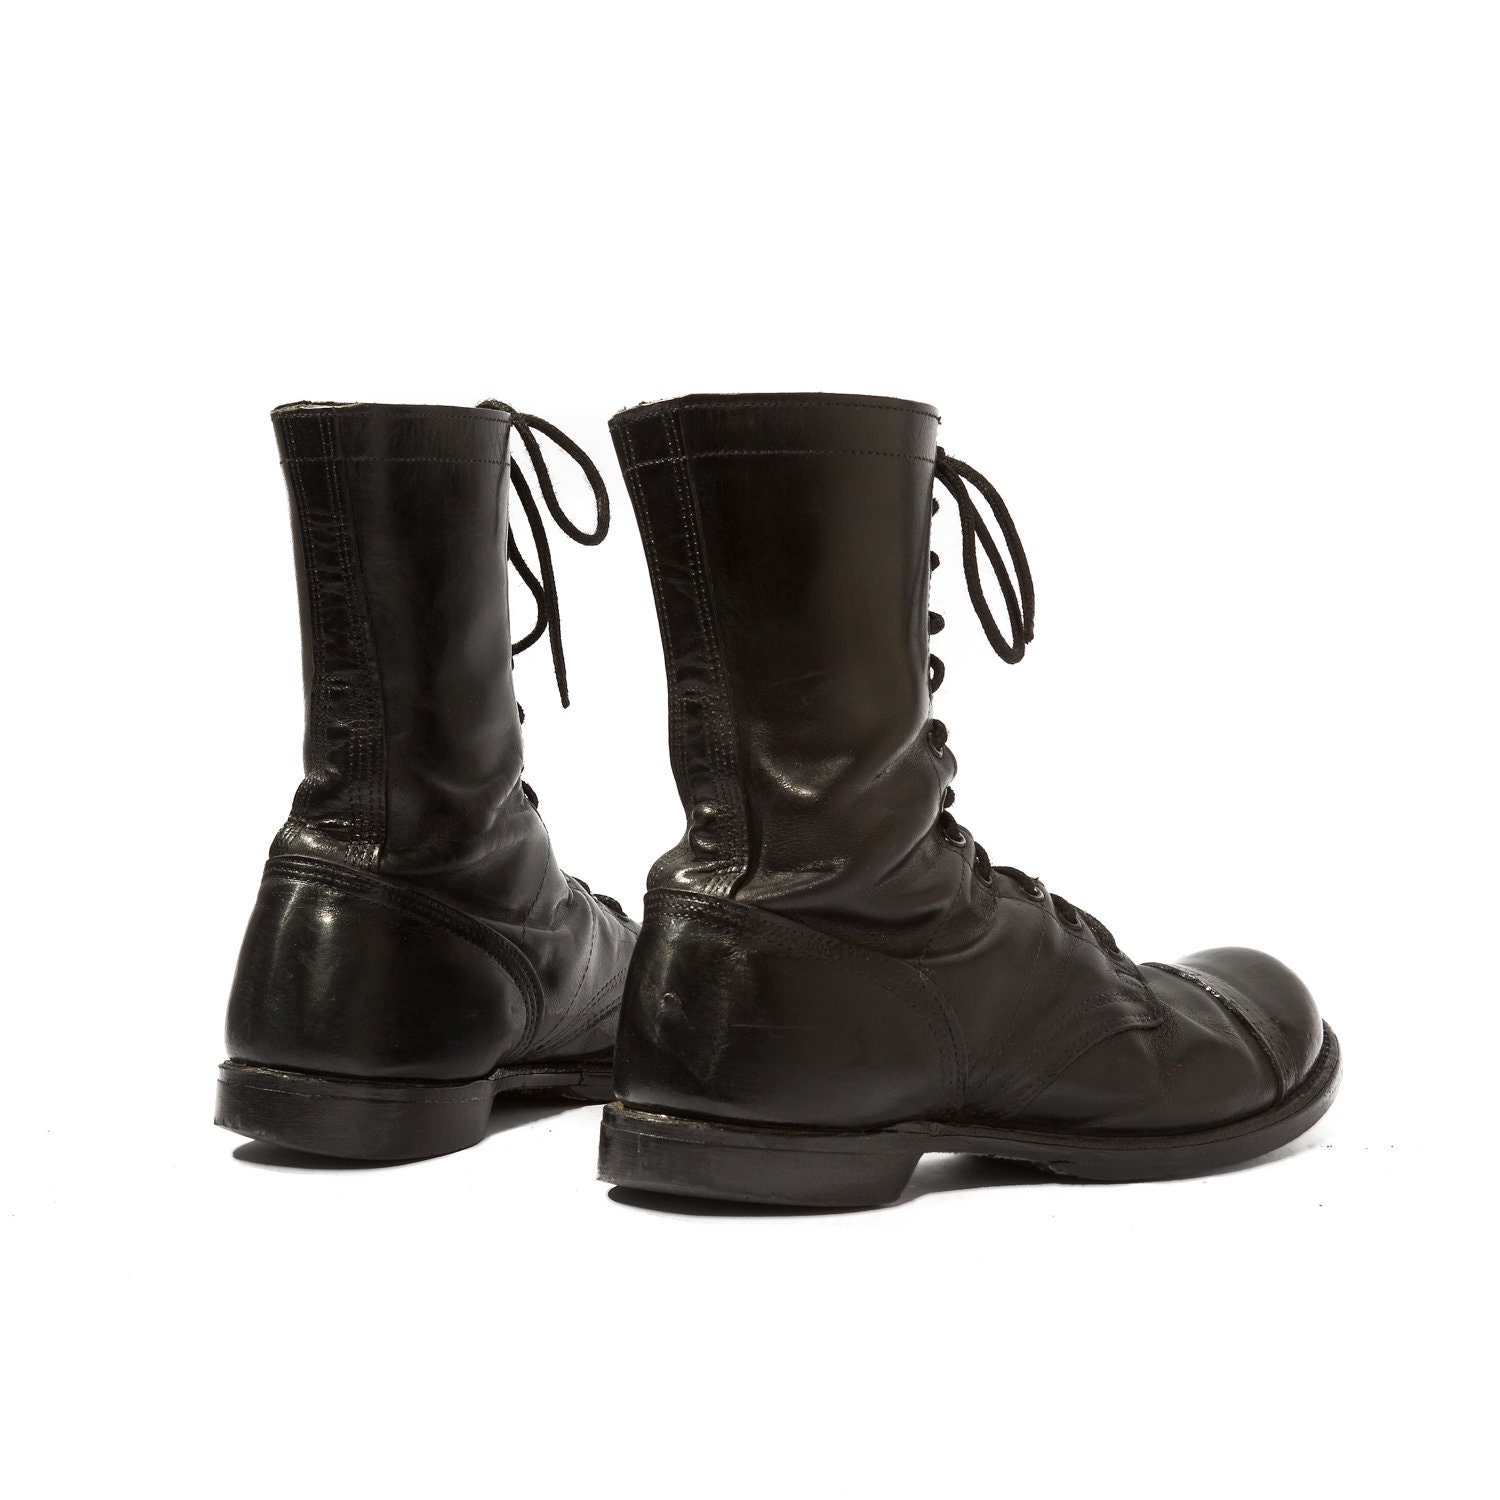 Vintage Combat Boots Corcoran Military Paratrooper Men's